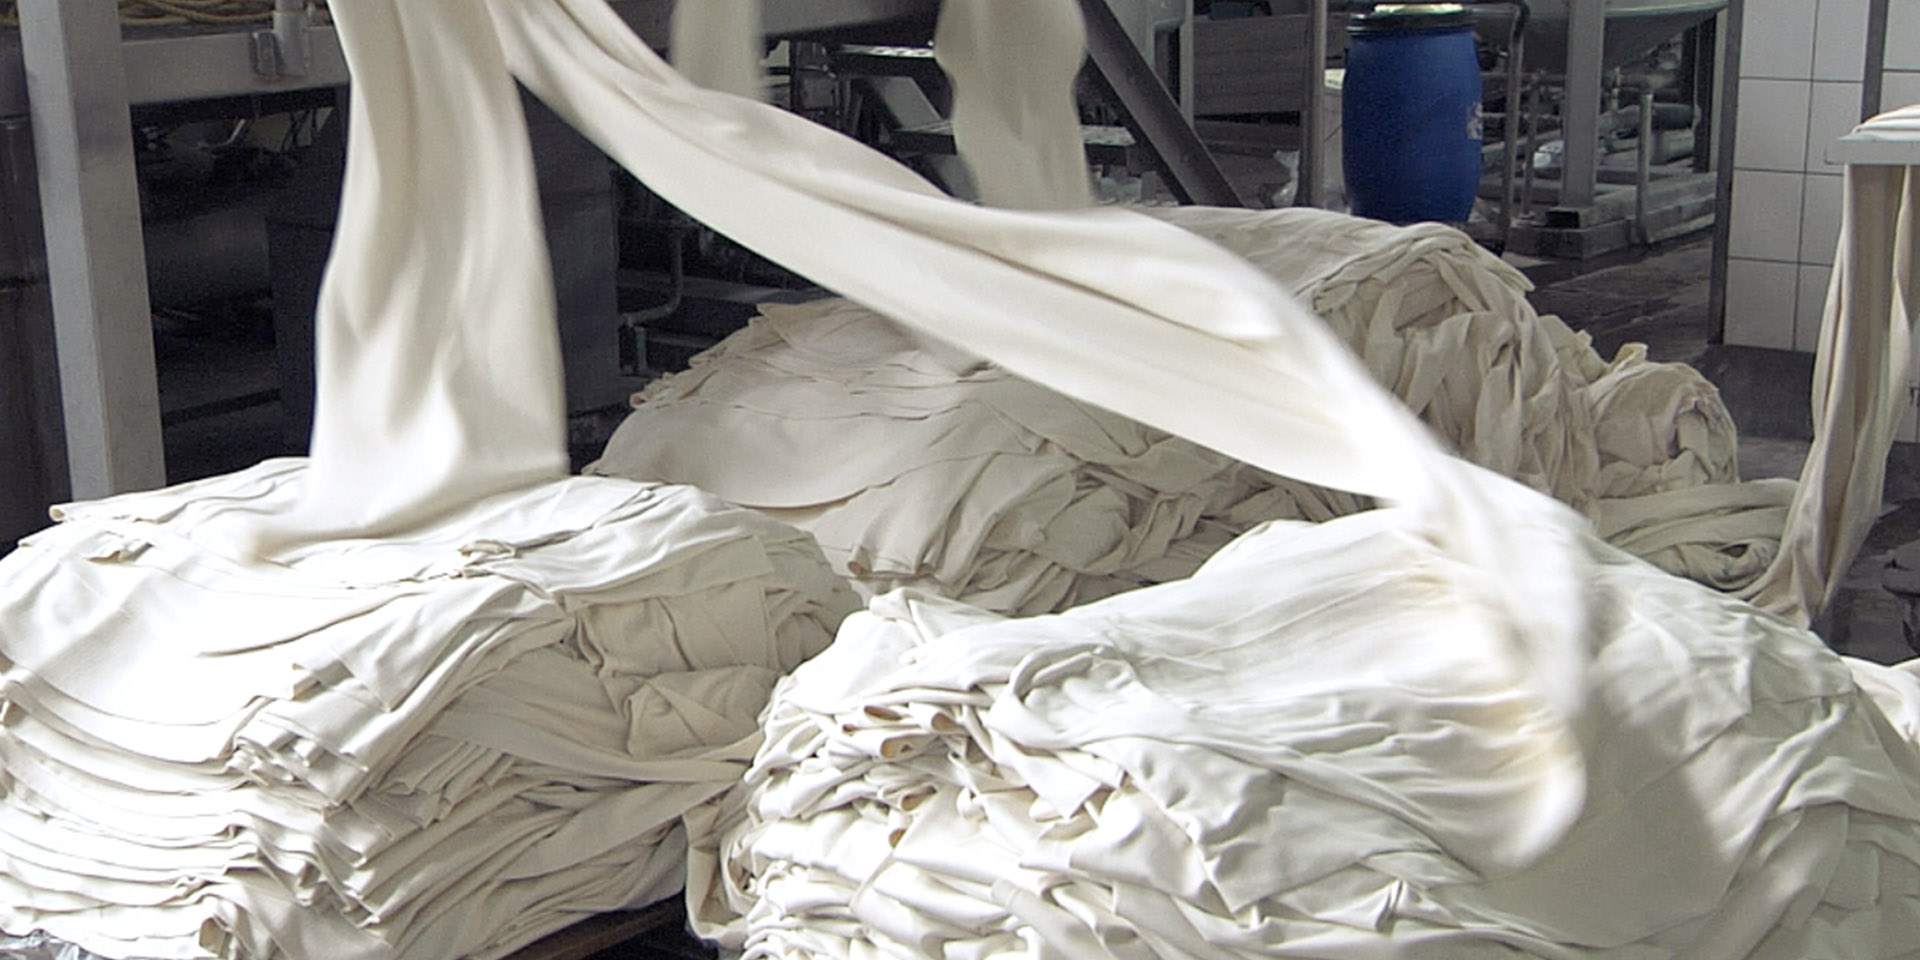 hessnatur | "Die textile Kette bei hessnatur" | Commercial Documentary